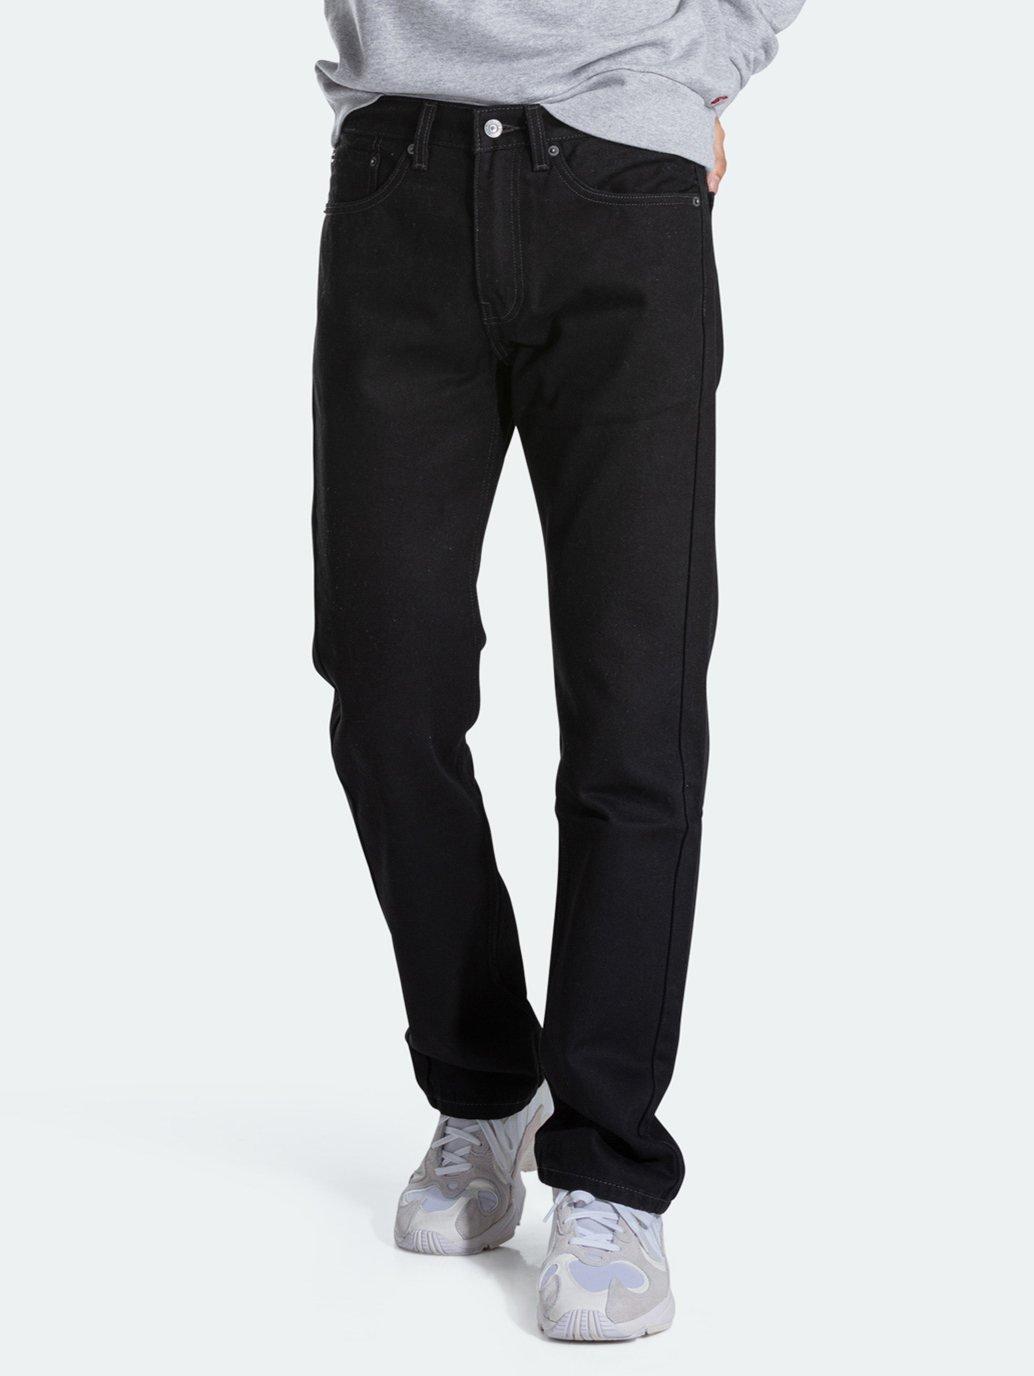 Buy Levi's® Men's 505™ Regular Jeans | Levi’s Official Online Store SG